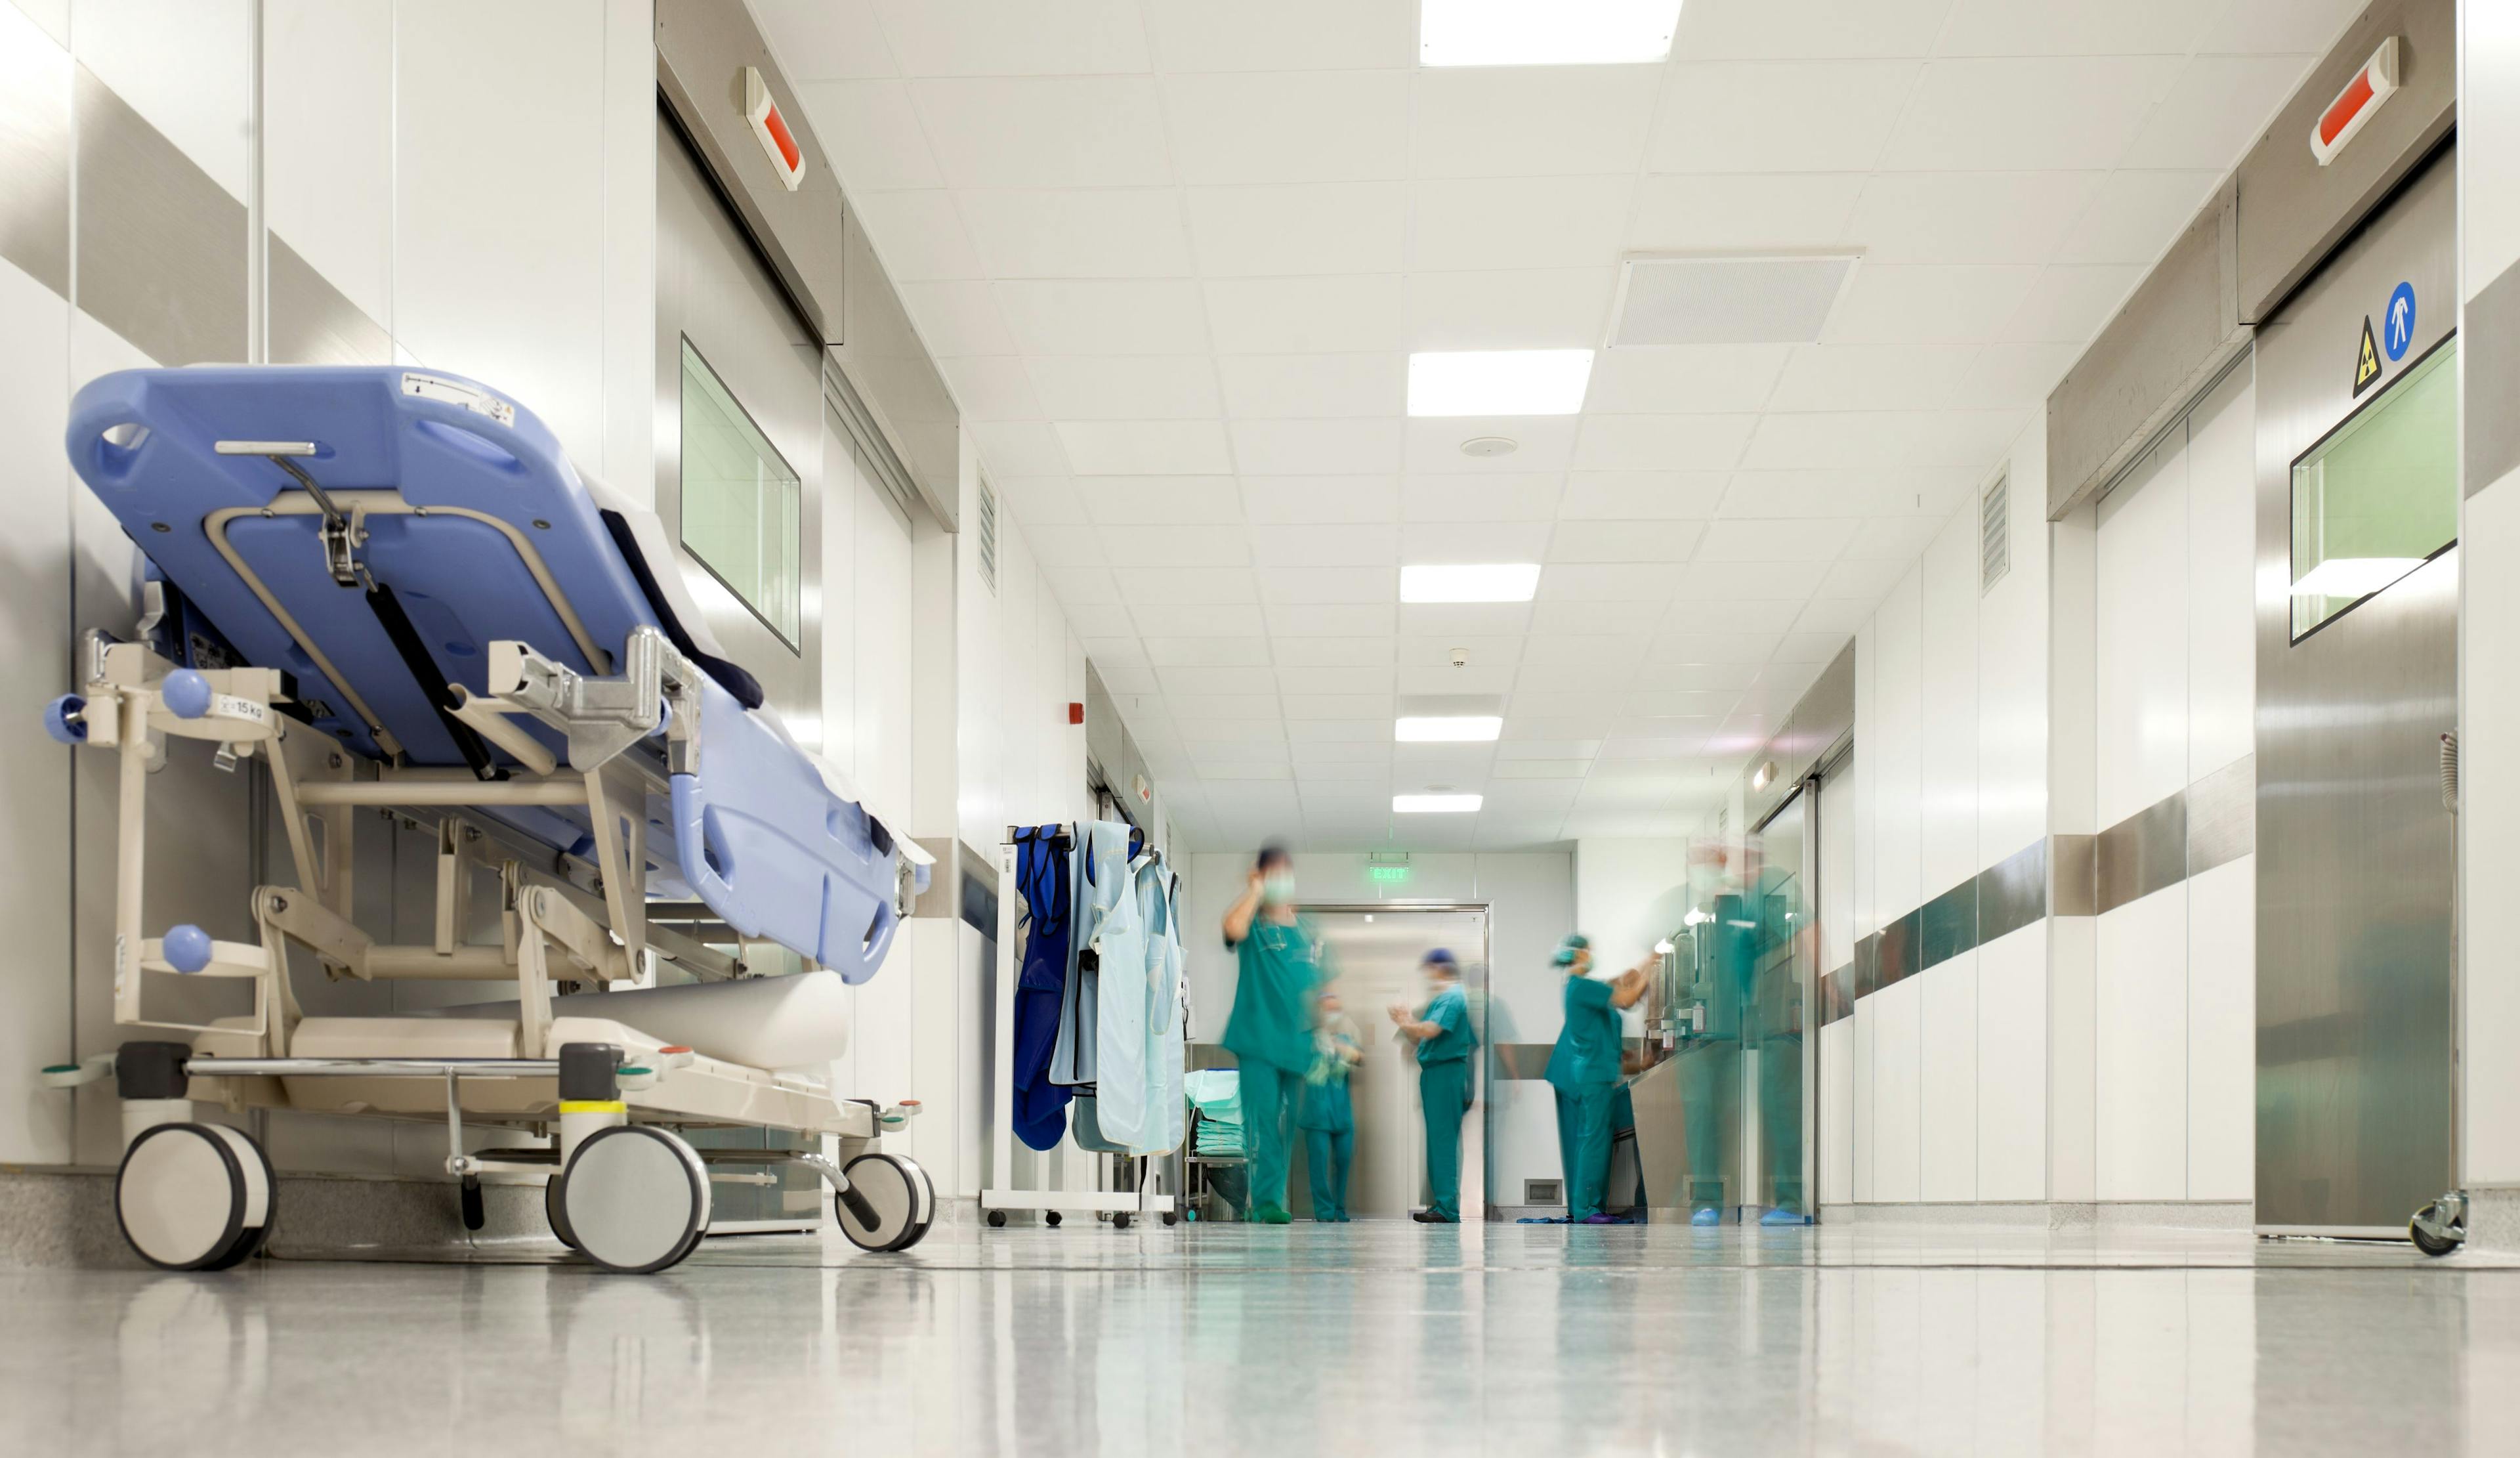 Hospital surgery corridor | VILevi - stock.adobe.com